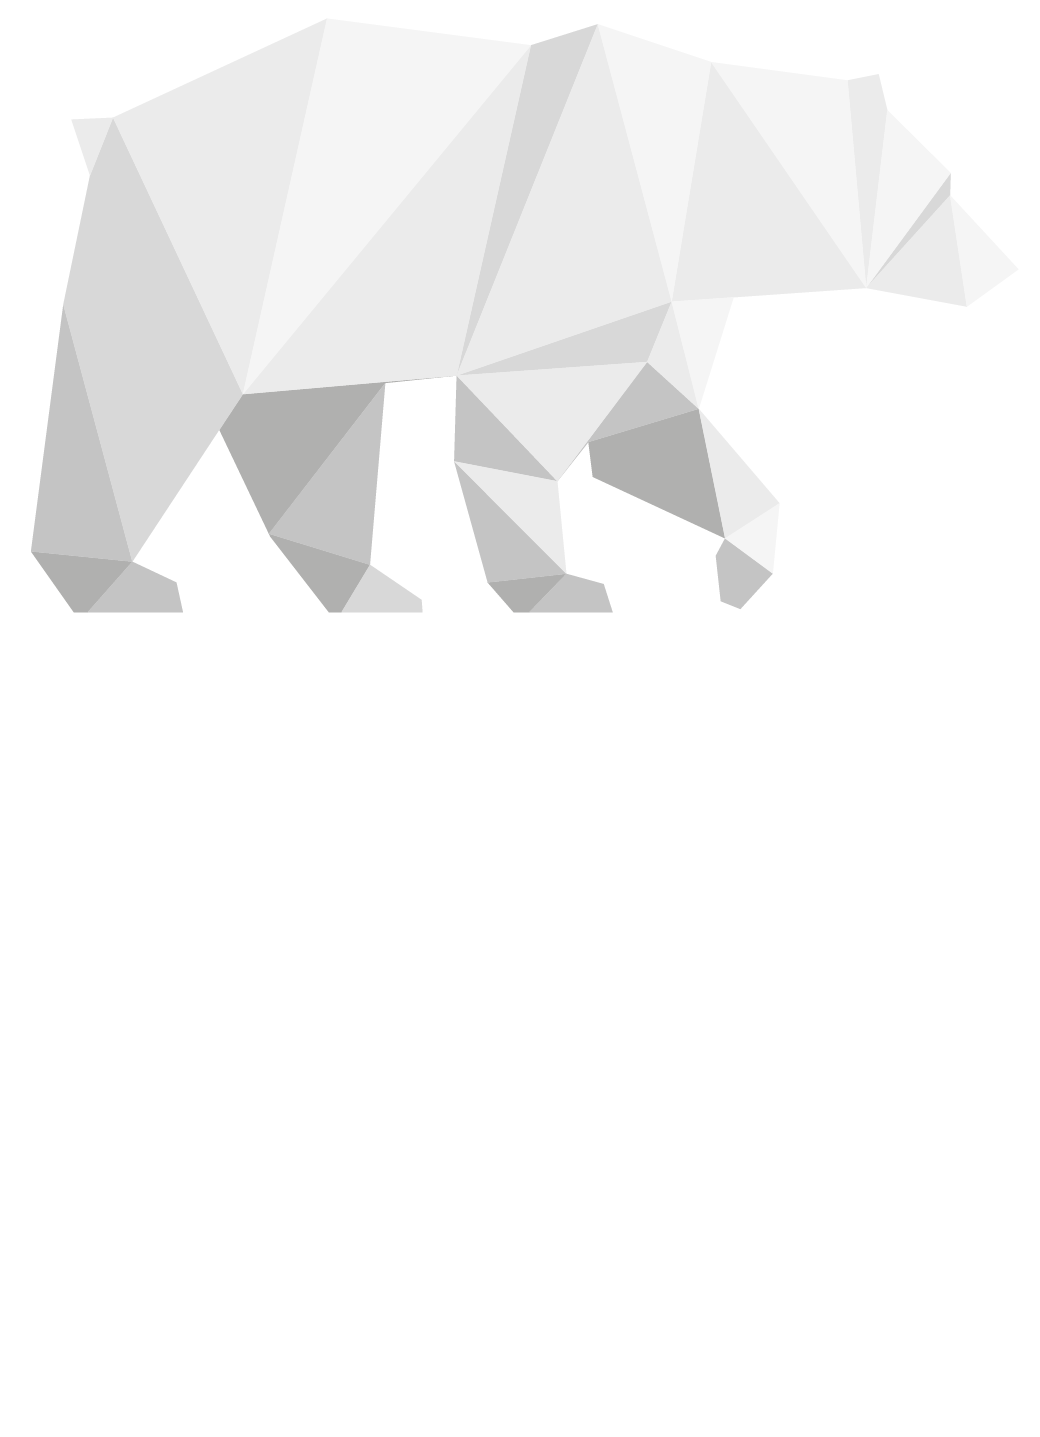 Digital Expo